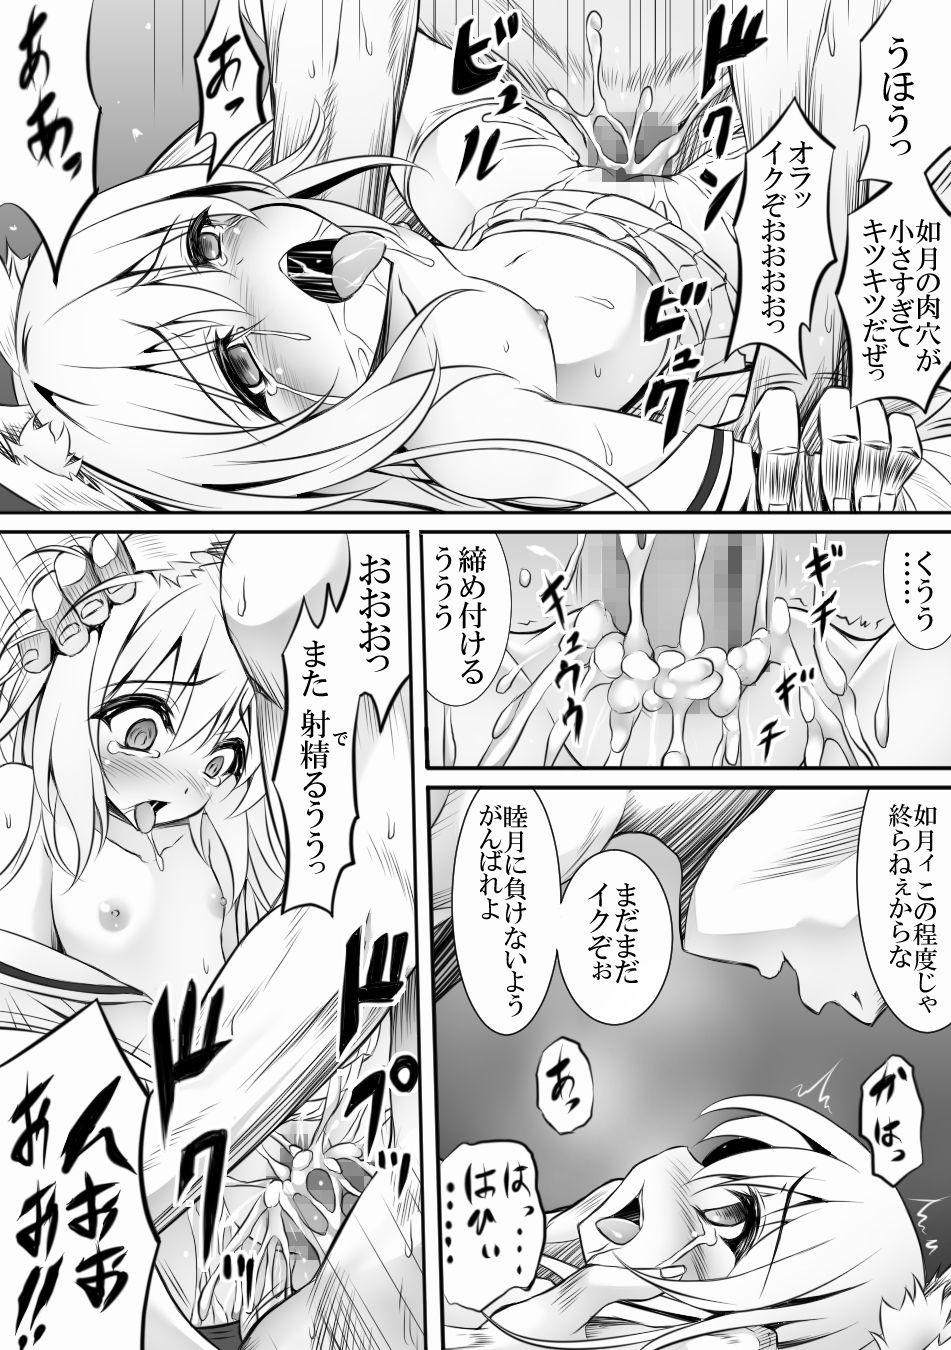 Interacial AzuLan 1 Page Manga - Azur lane Sextoys - Page 1